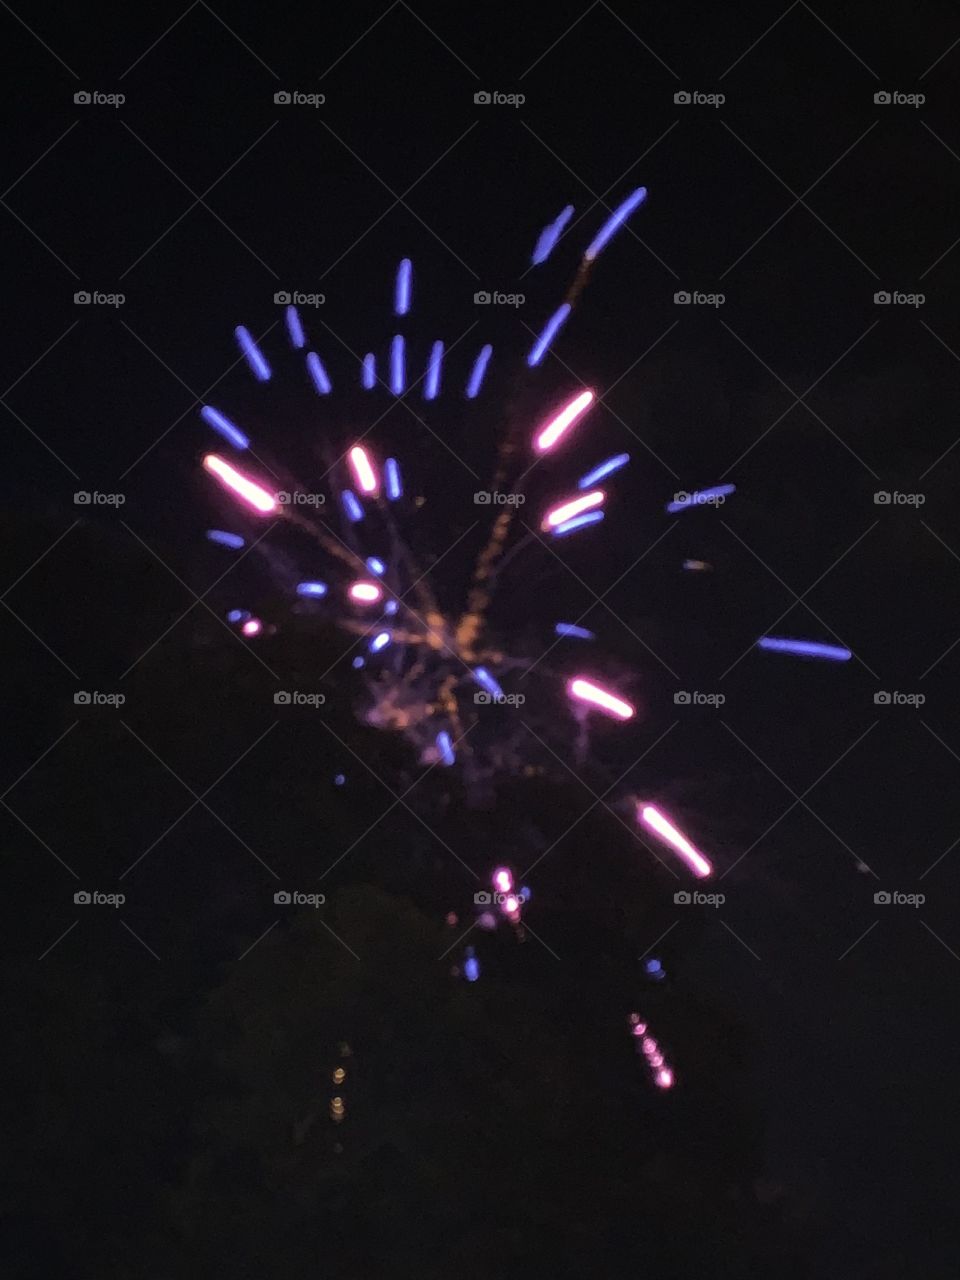 July 4th fireworks celebration 